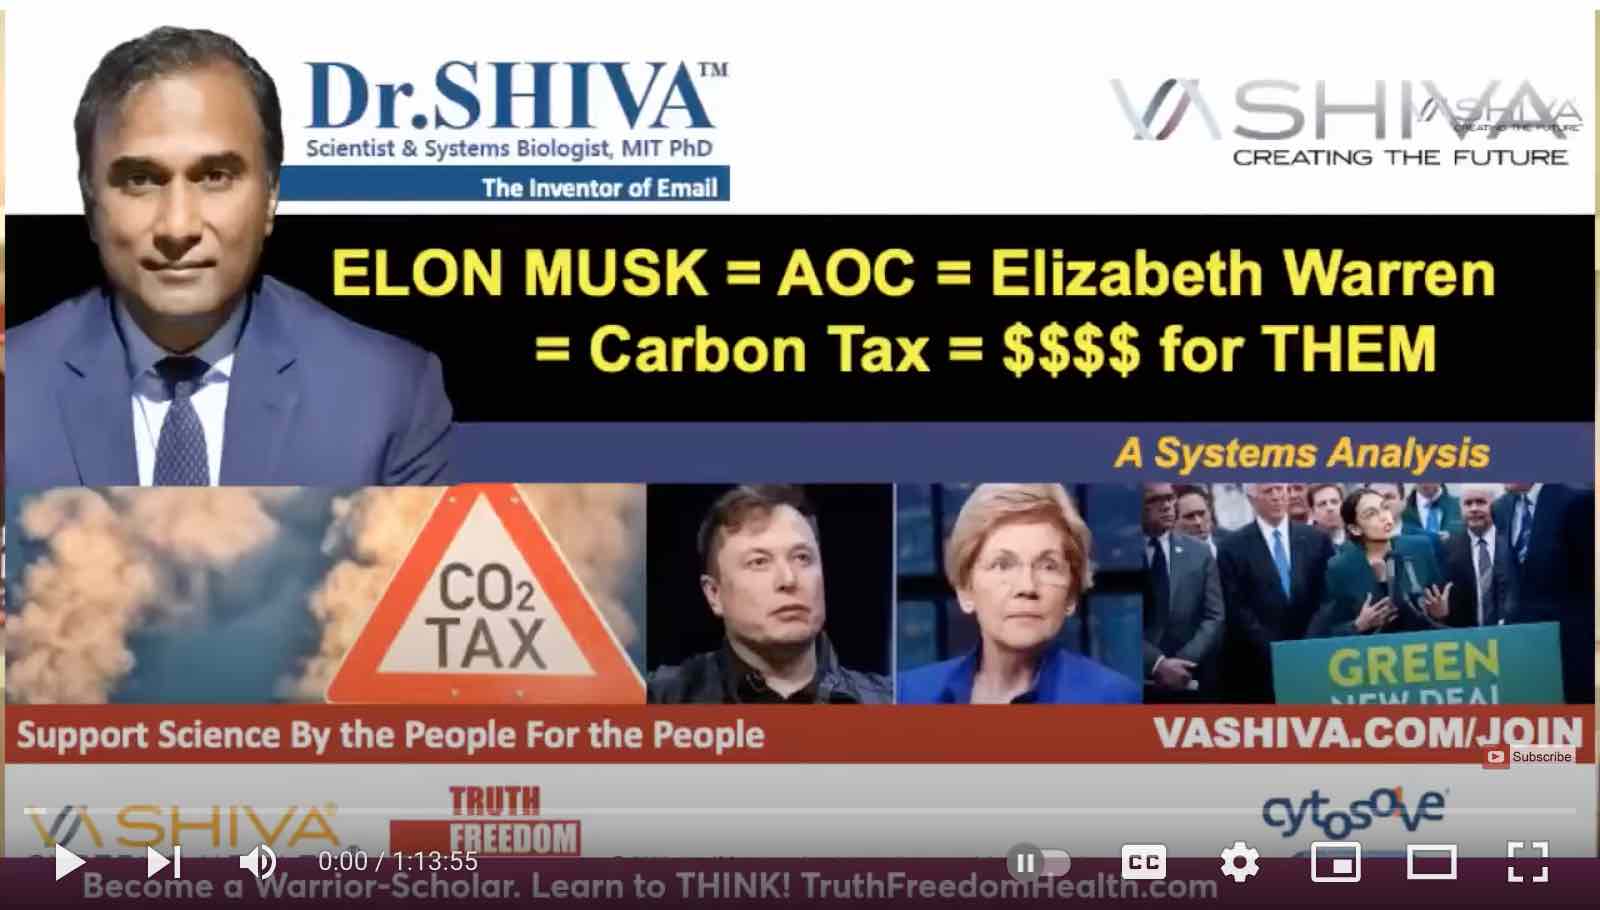 Dr.SHIVA LIVE: ELON MUSK = AOC = ELIZABETH WARREN = CARBON TAX = $$$$ for THEM